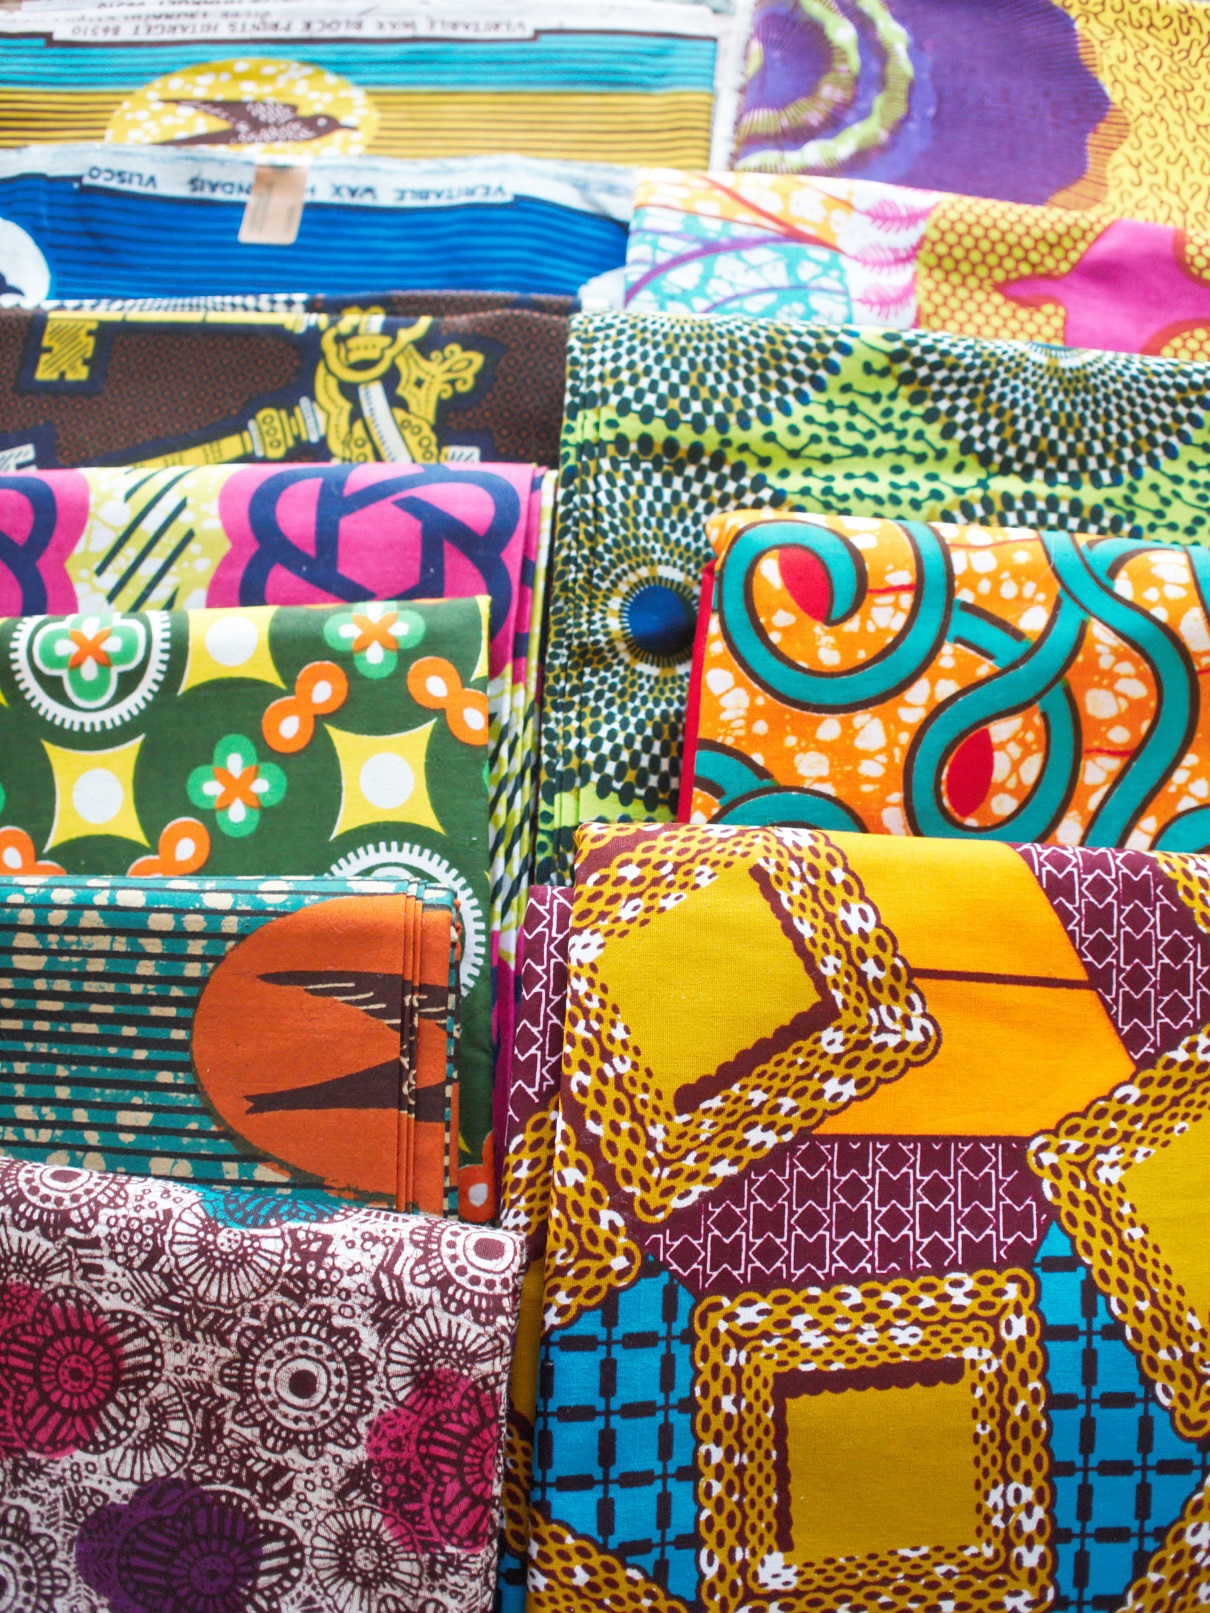 4/18wed-21sat『African textile 煌めく色との出会い2018-スカートオーダー会』